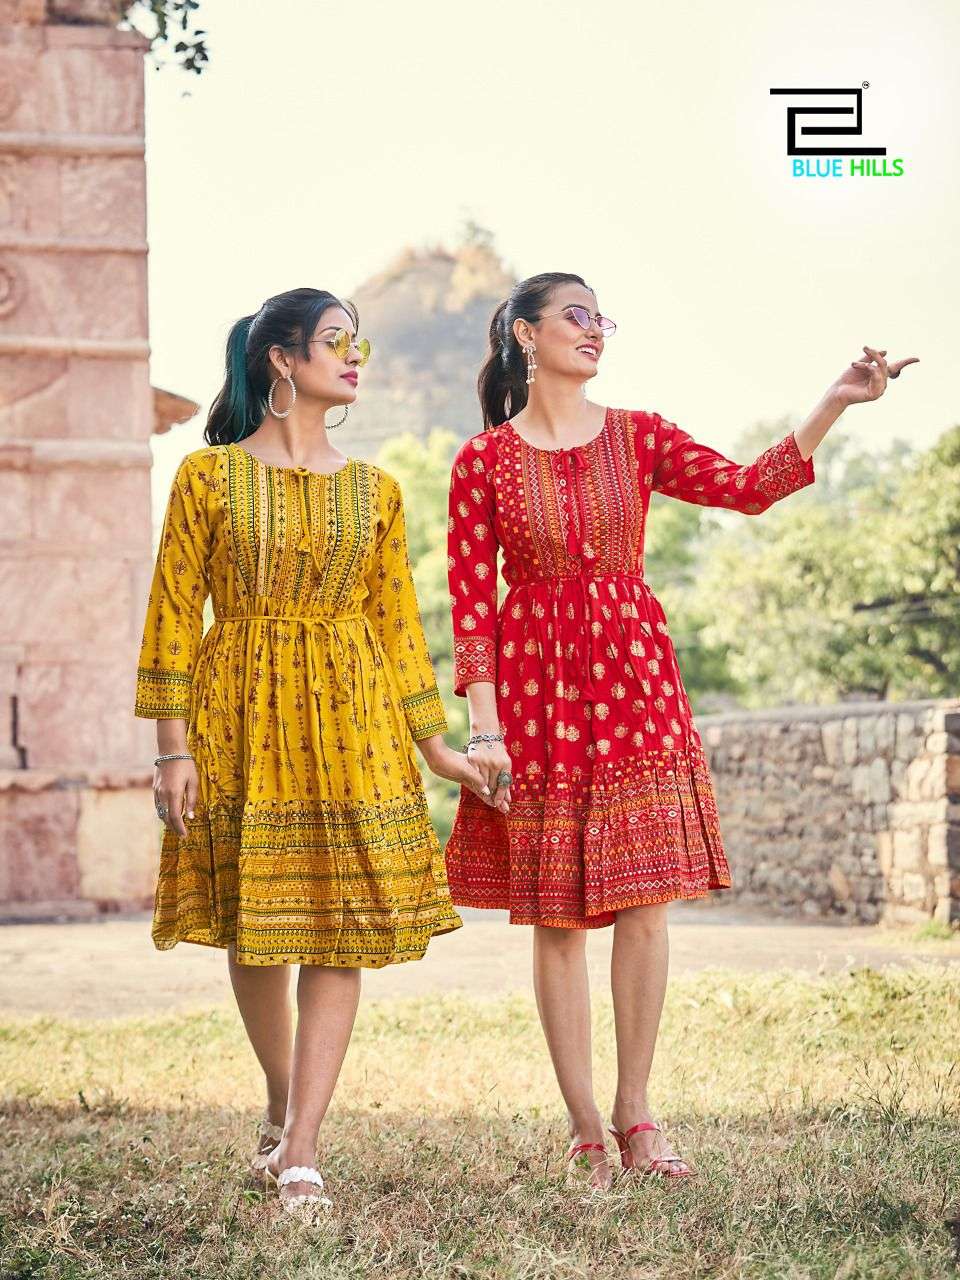 bluehills show off vol-3 3001-3008 series trendy designer tunic style kurti catalogue collection 2022 